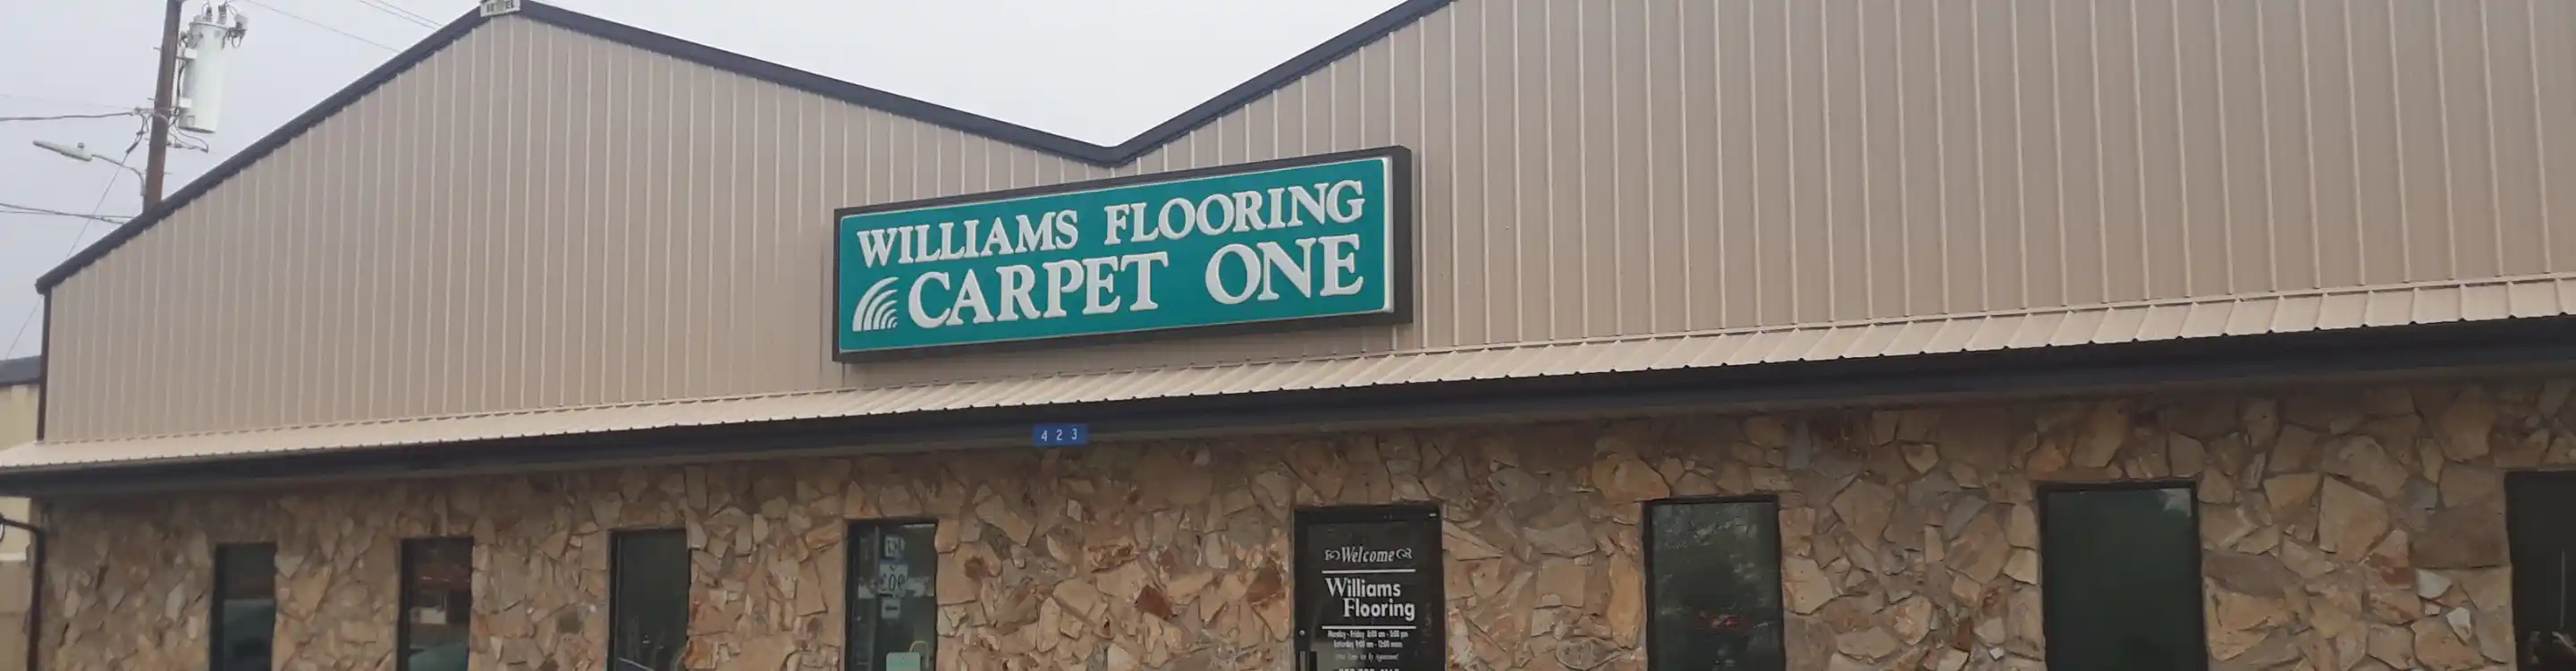 Williams Flooring Carpet One Storefrront